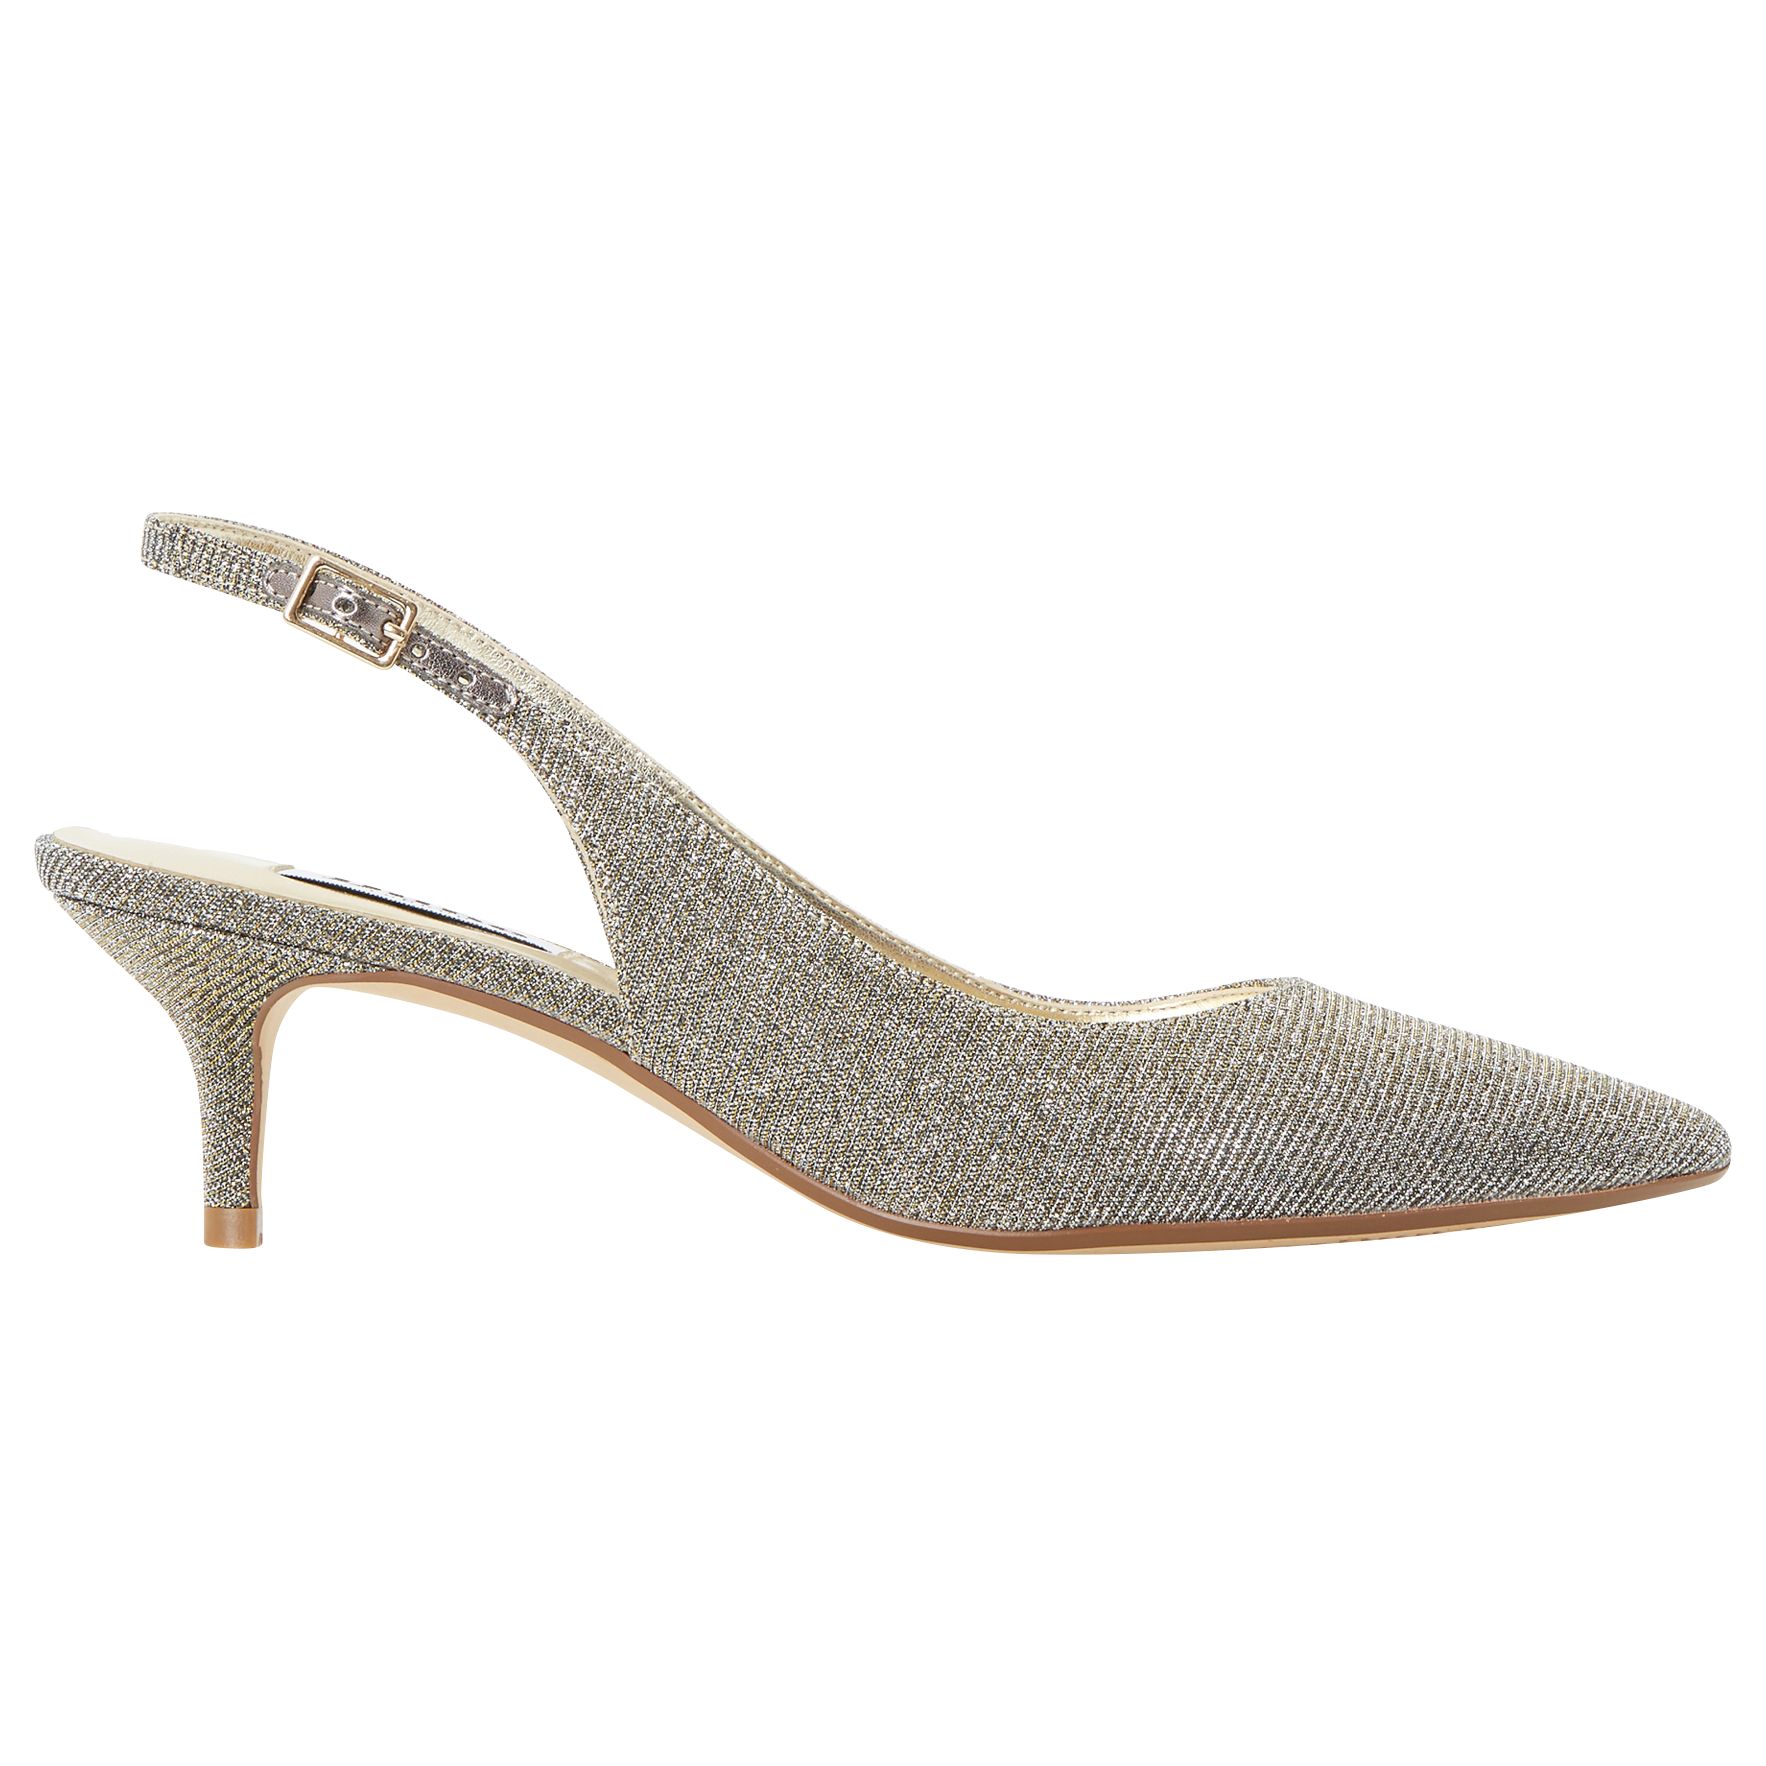 Dune Casandra Kitten Heel Slingback Court Shoes, Gold Fabric, 8